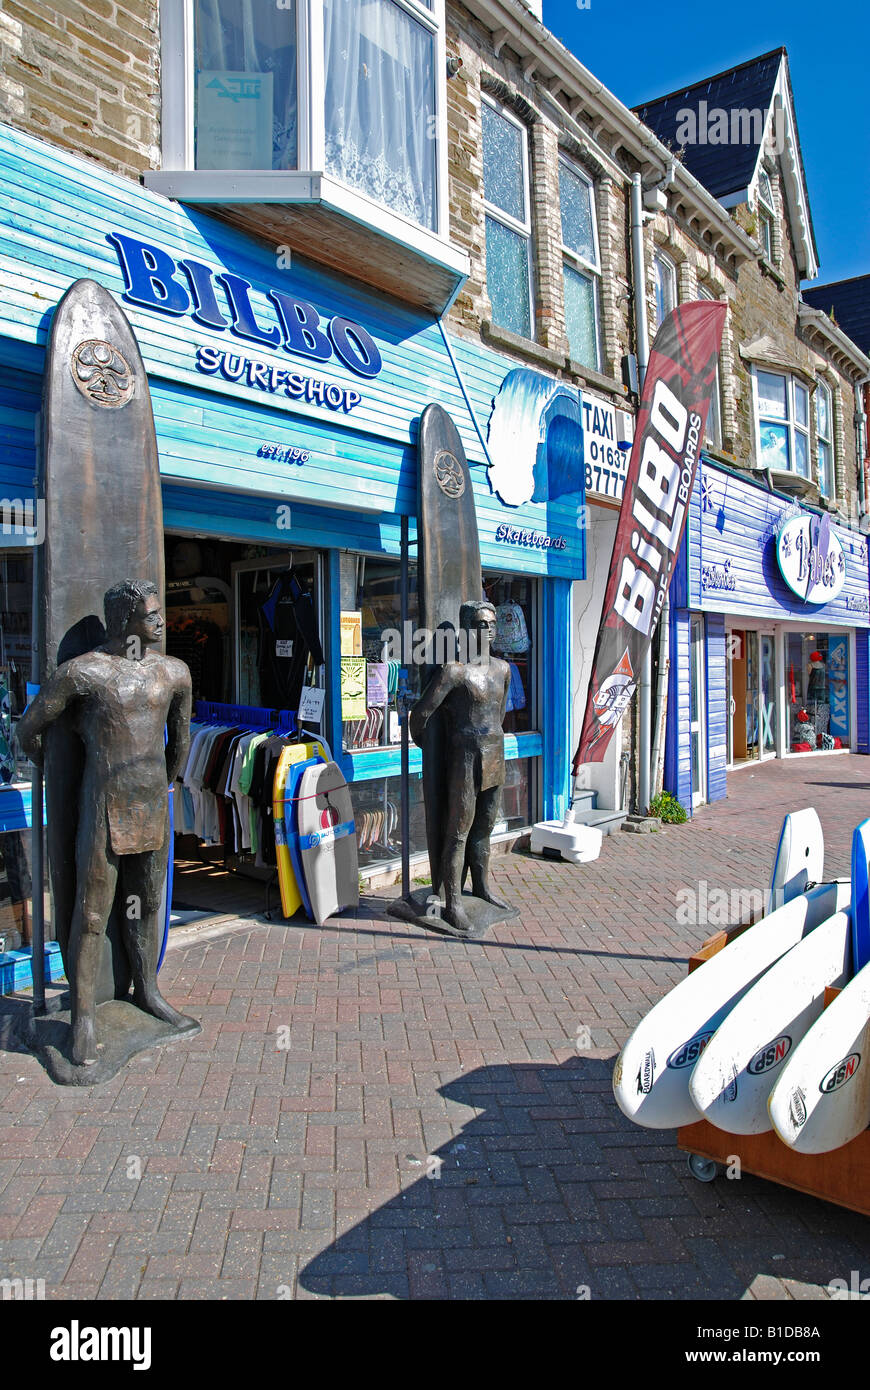 bilbo surf shop,newqauy,cornwall,england Stock Photo